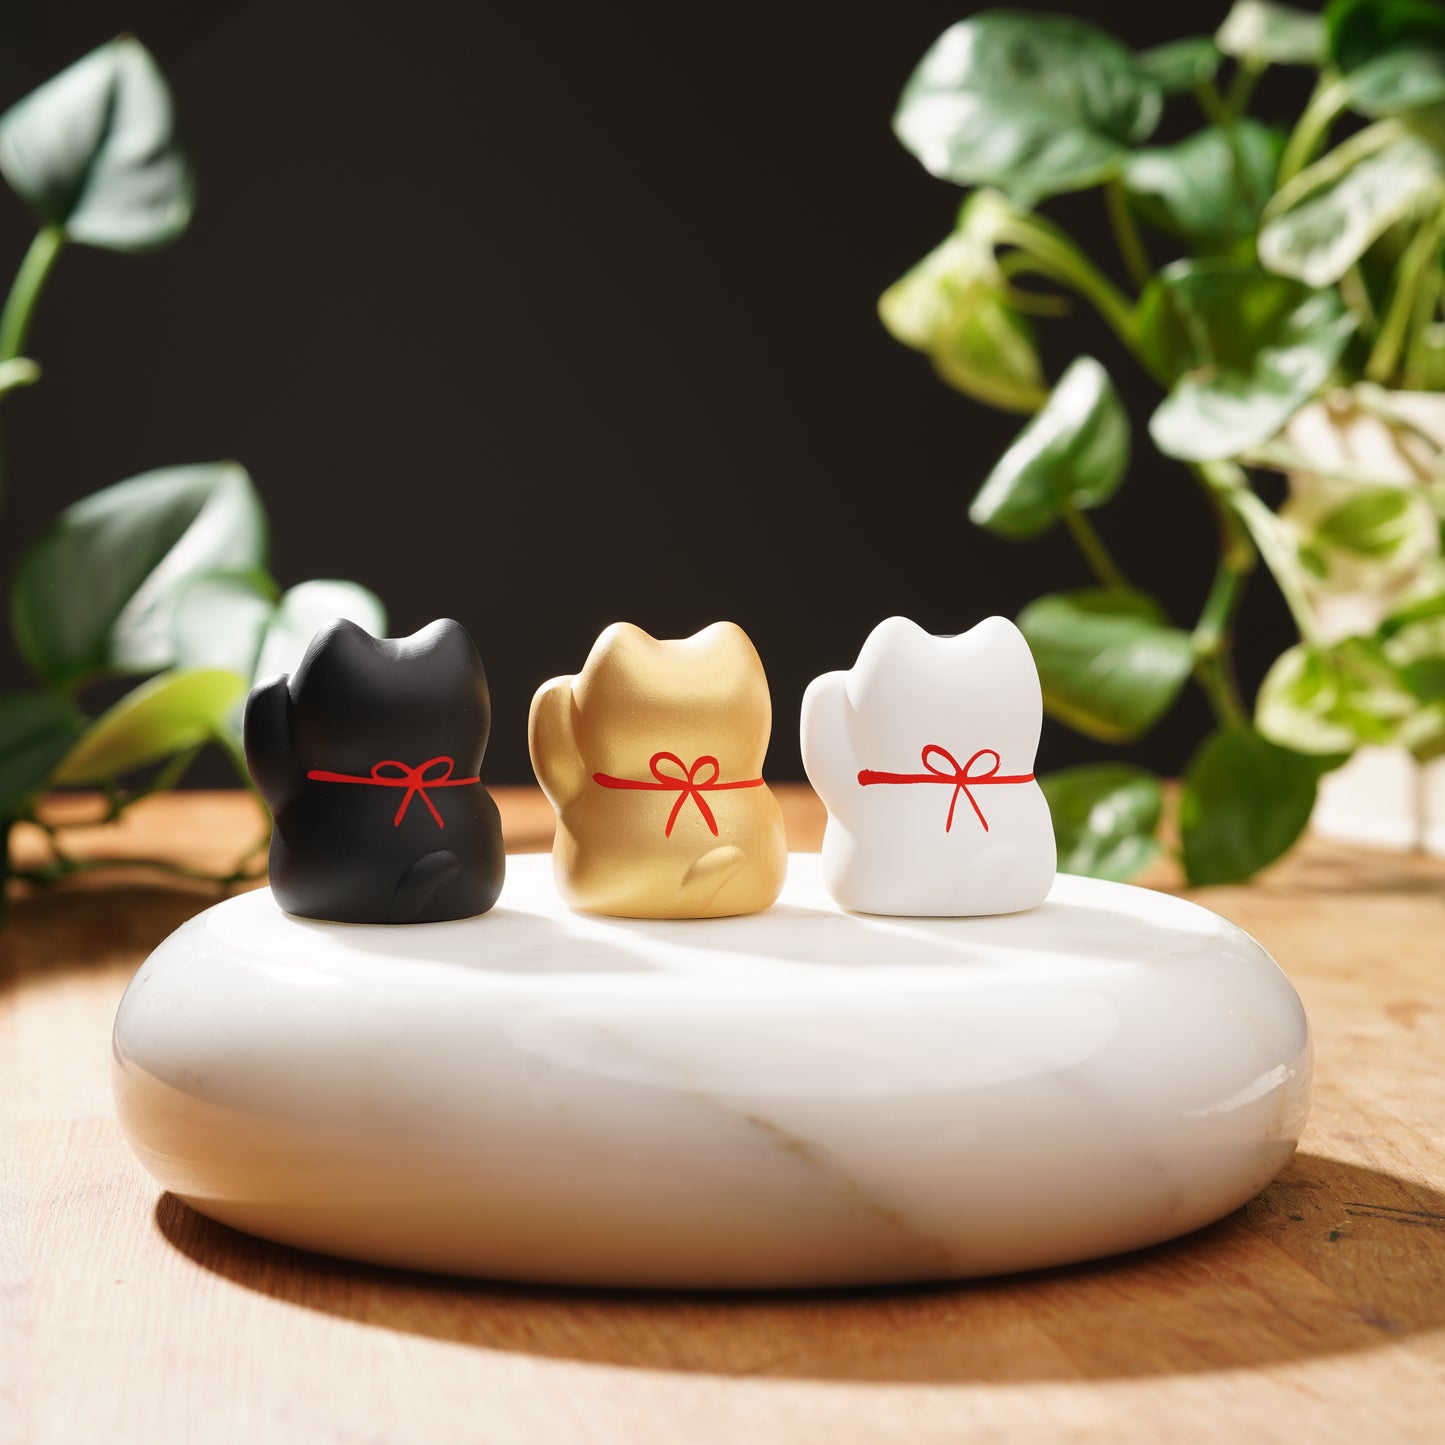 Ceramic Maneki Neko-Lucky Cat Set For Luck, Wealth, and Prosperity